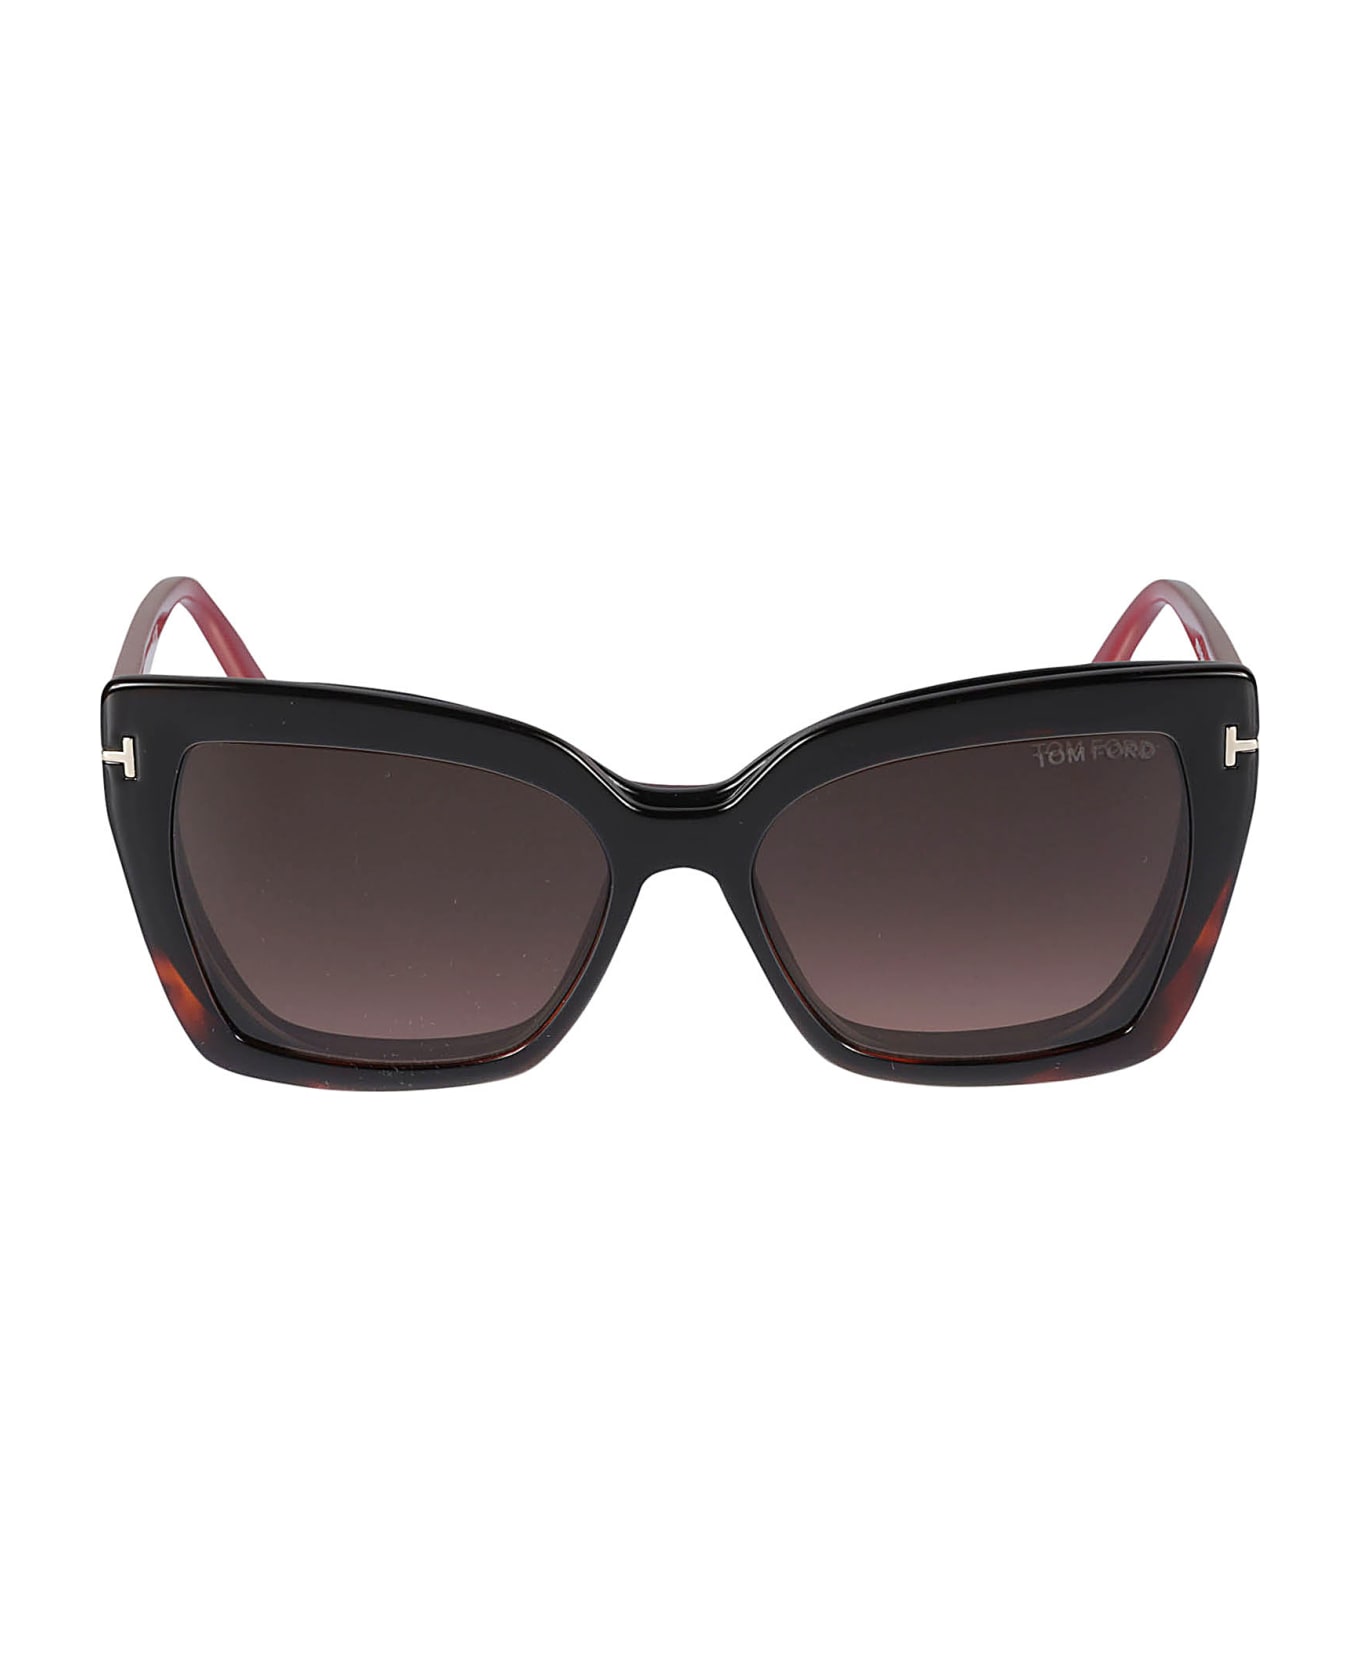 Tom Ford Eyewear Removable Frame Sunglasses - 075